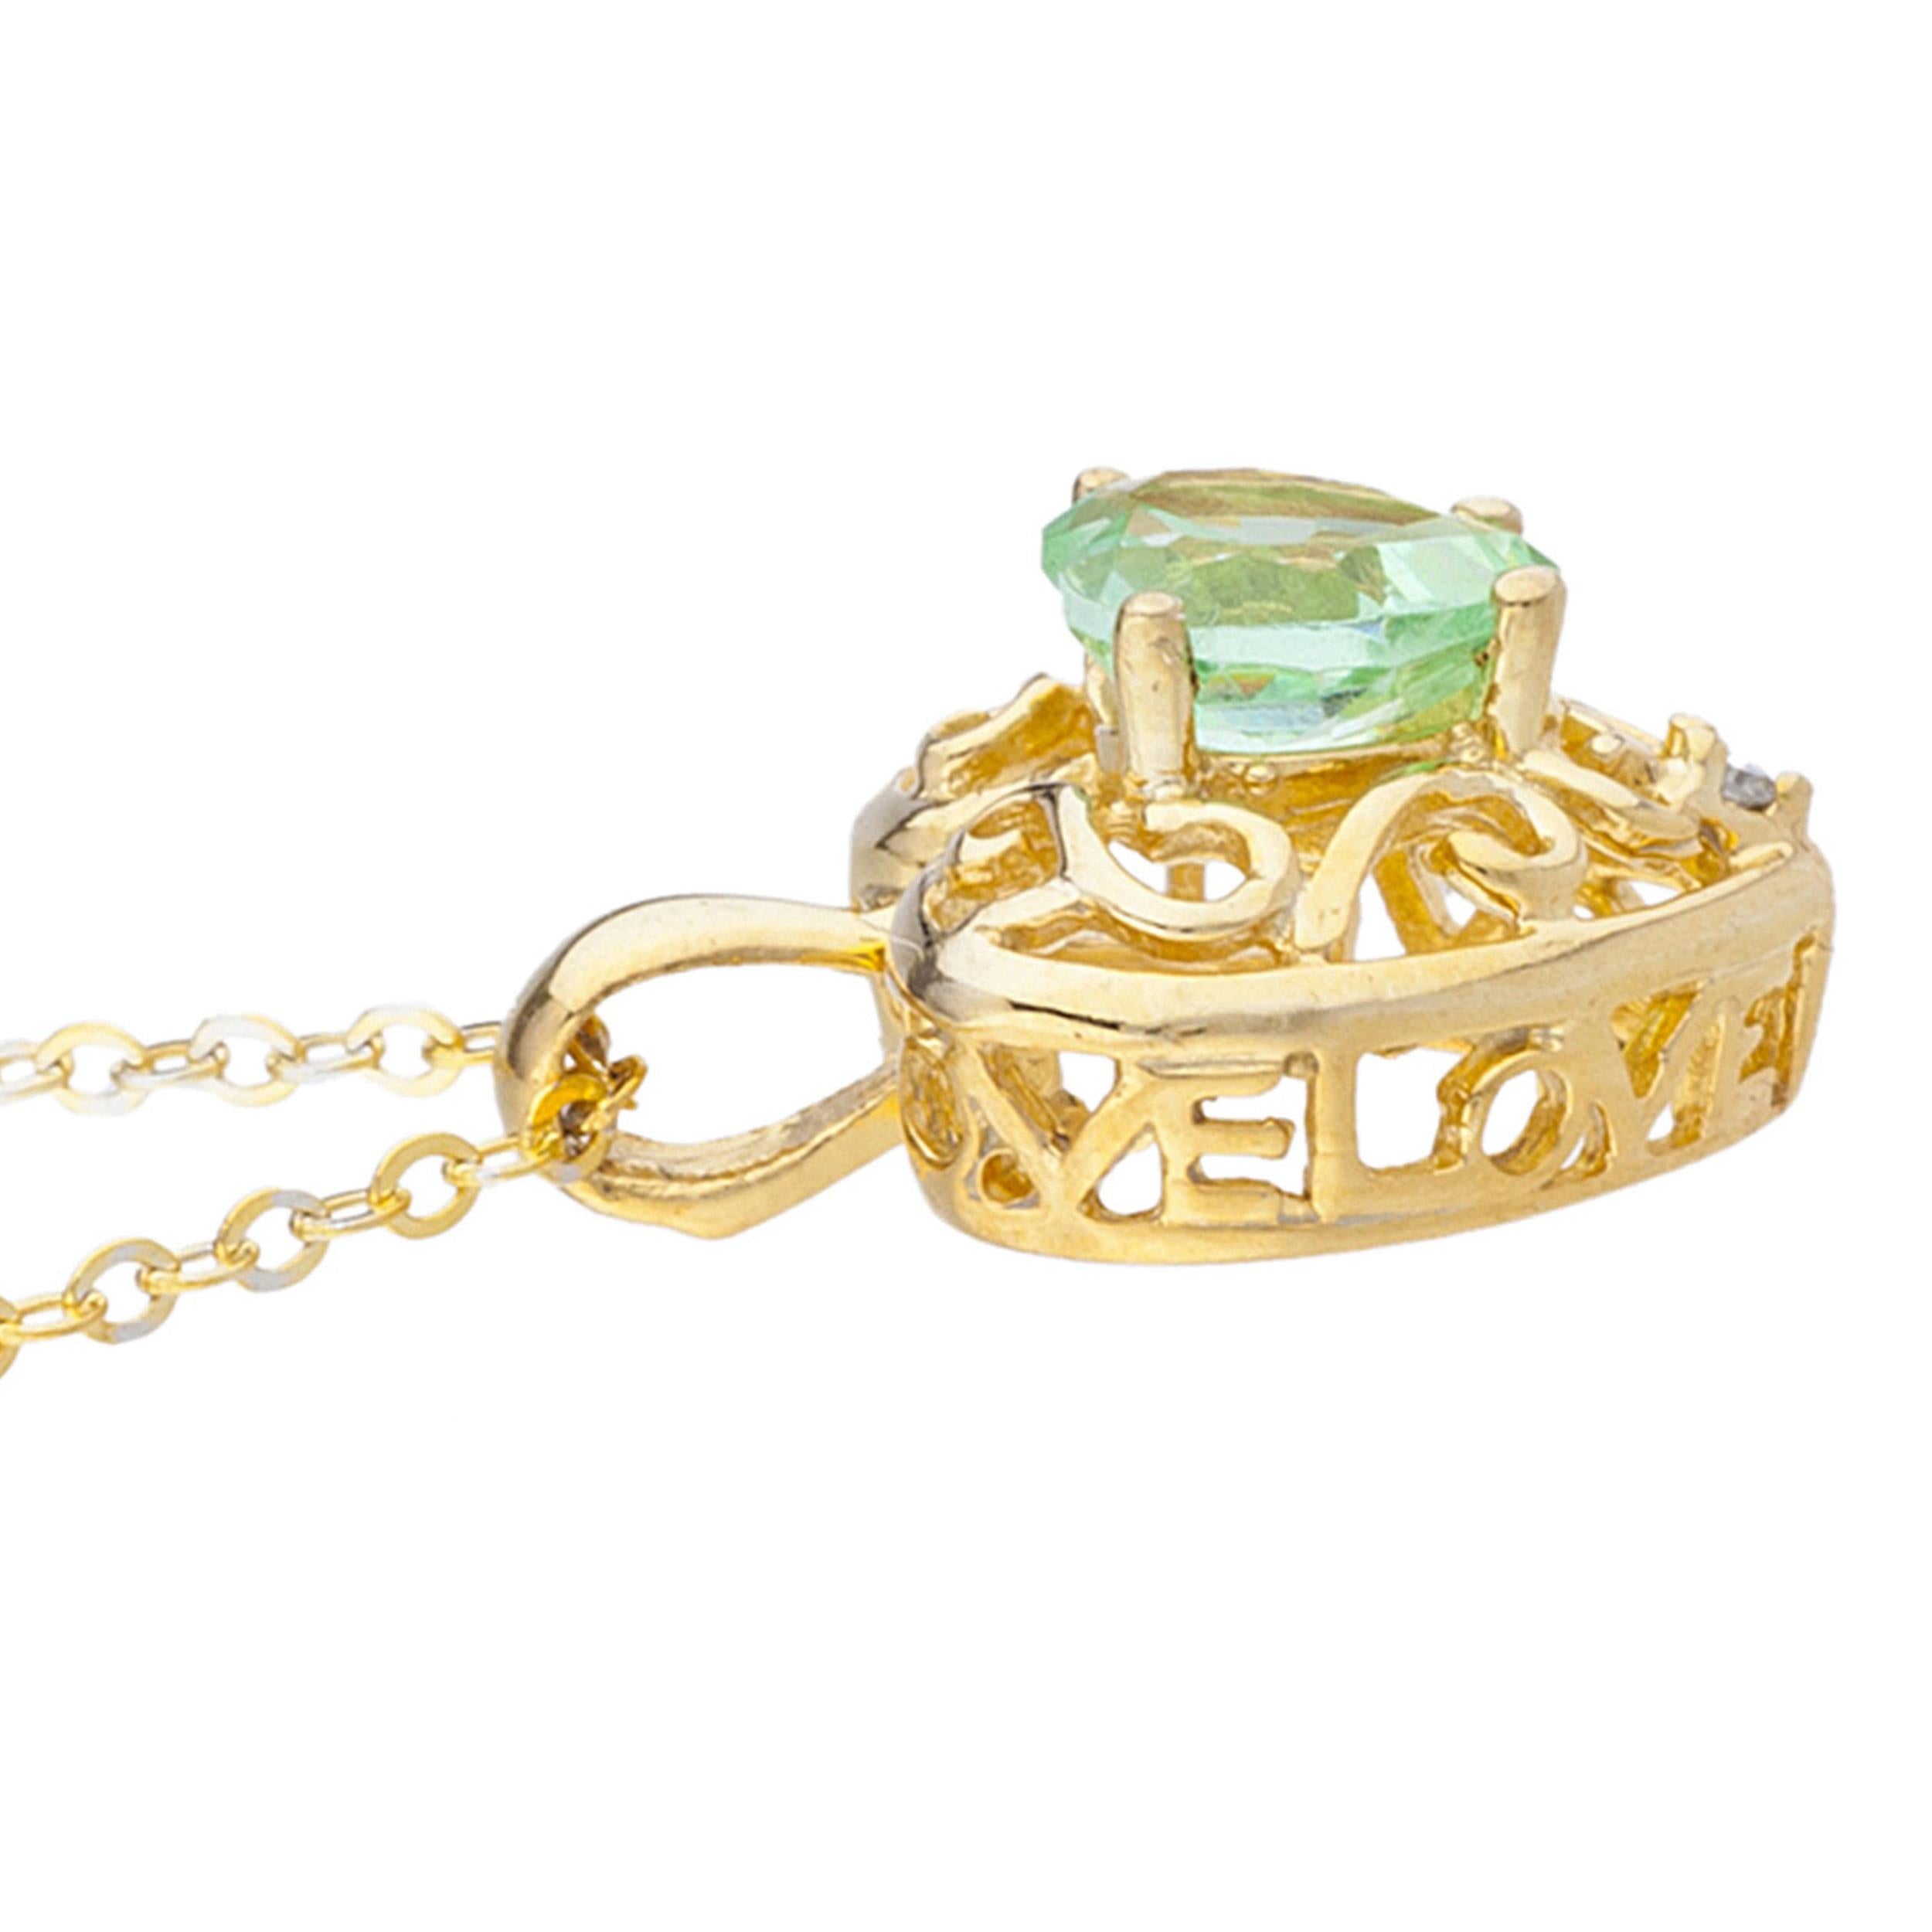 14Kt Gold Green Sapphire & Diamond Heart LOVE ENGRAVED Pendant Necklace